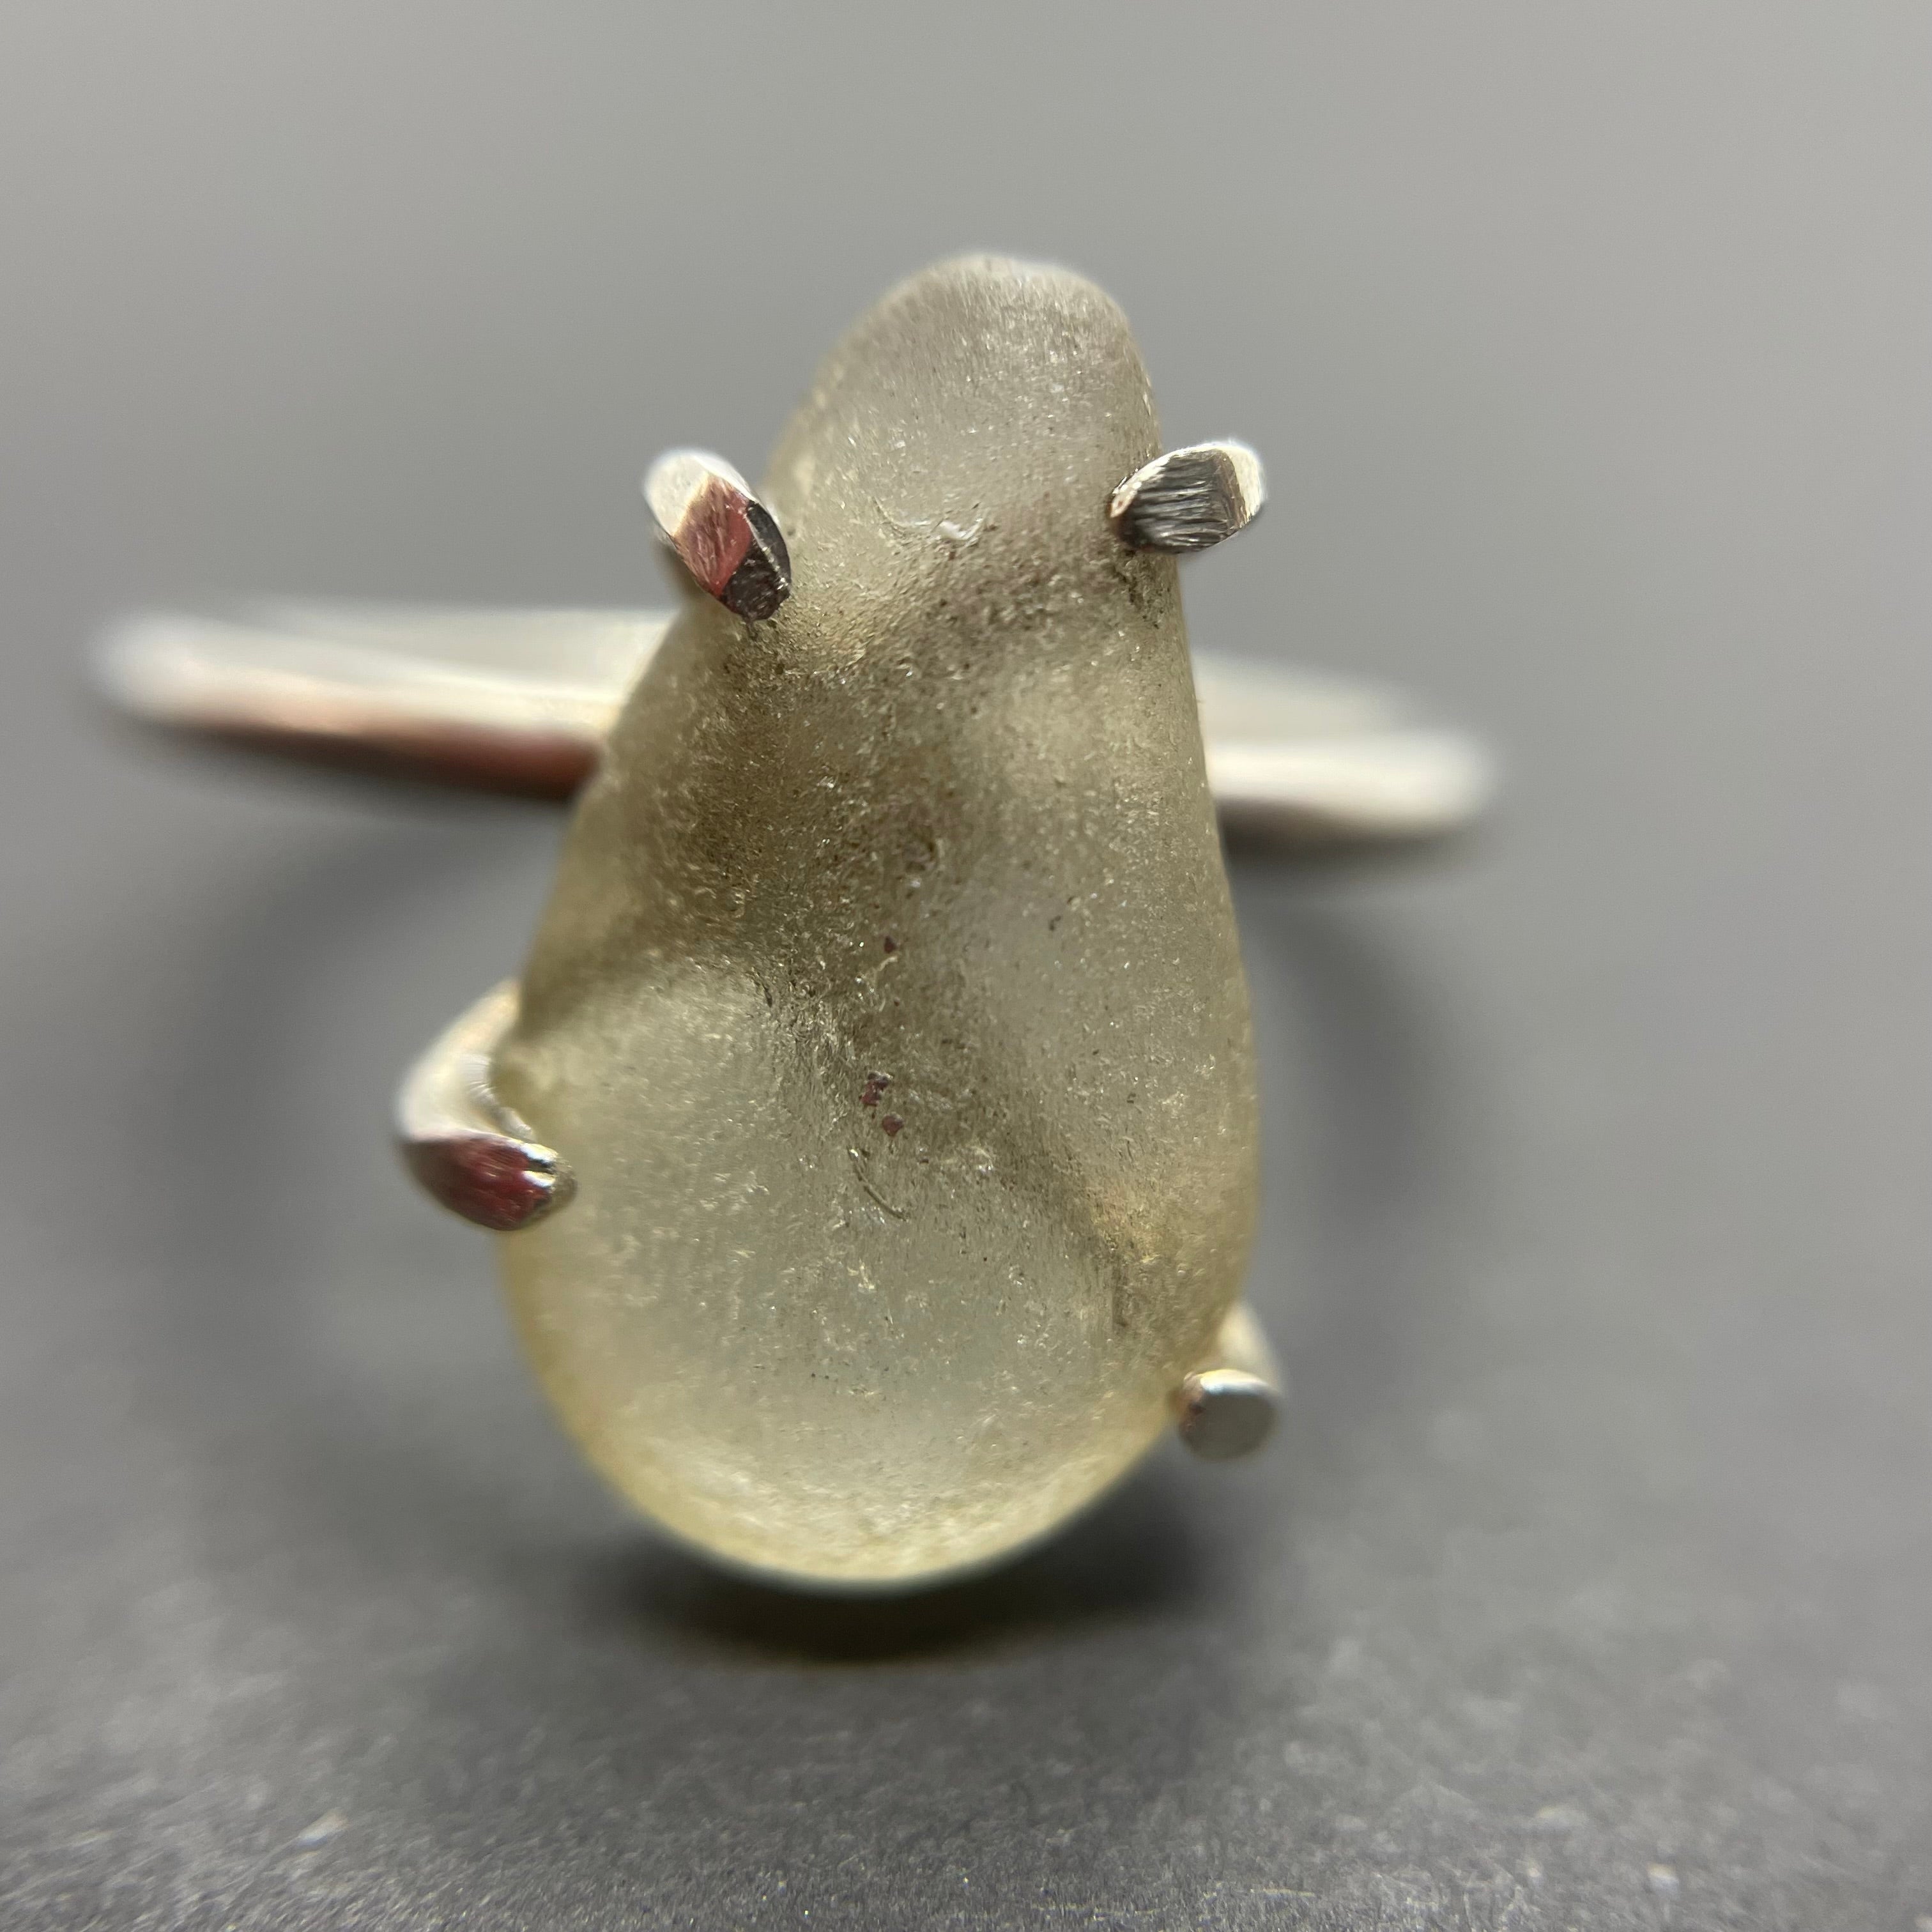 Sea Glass Claw Ring (UK N)